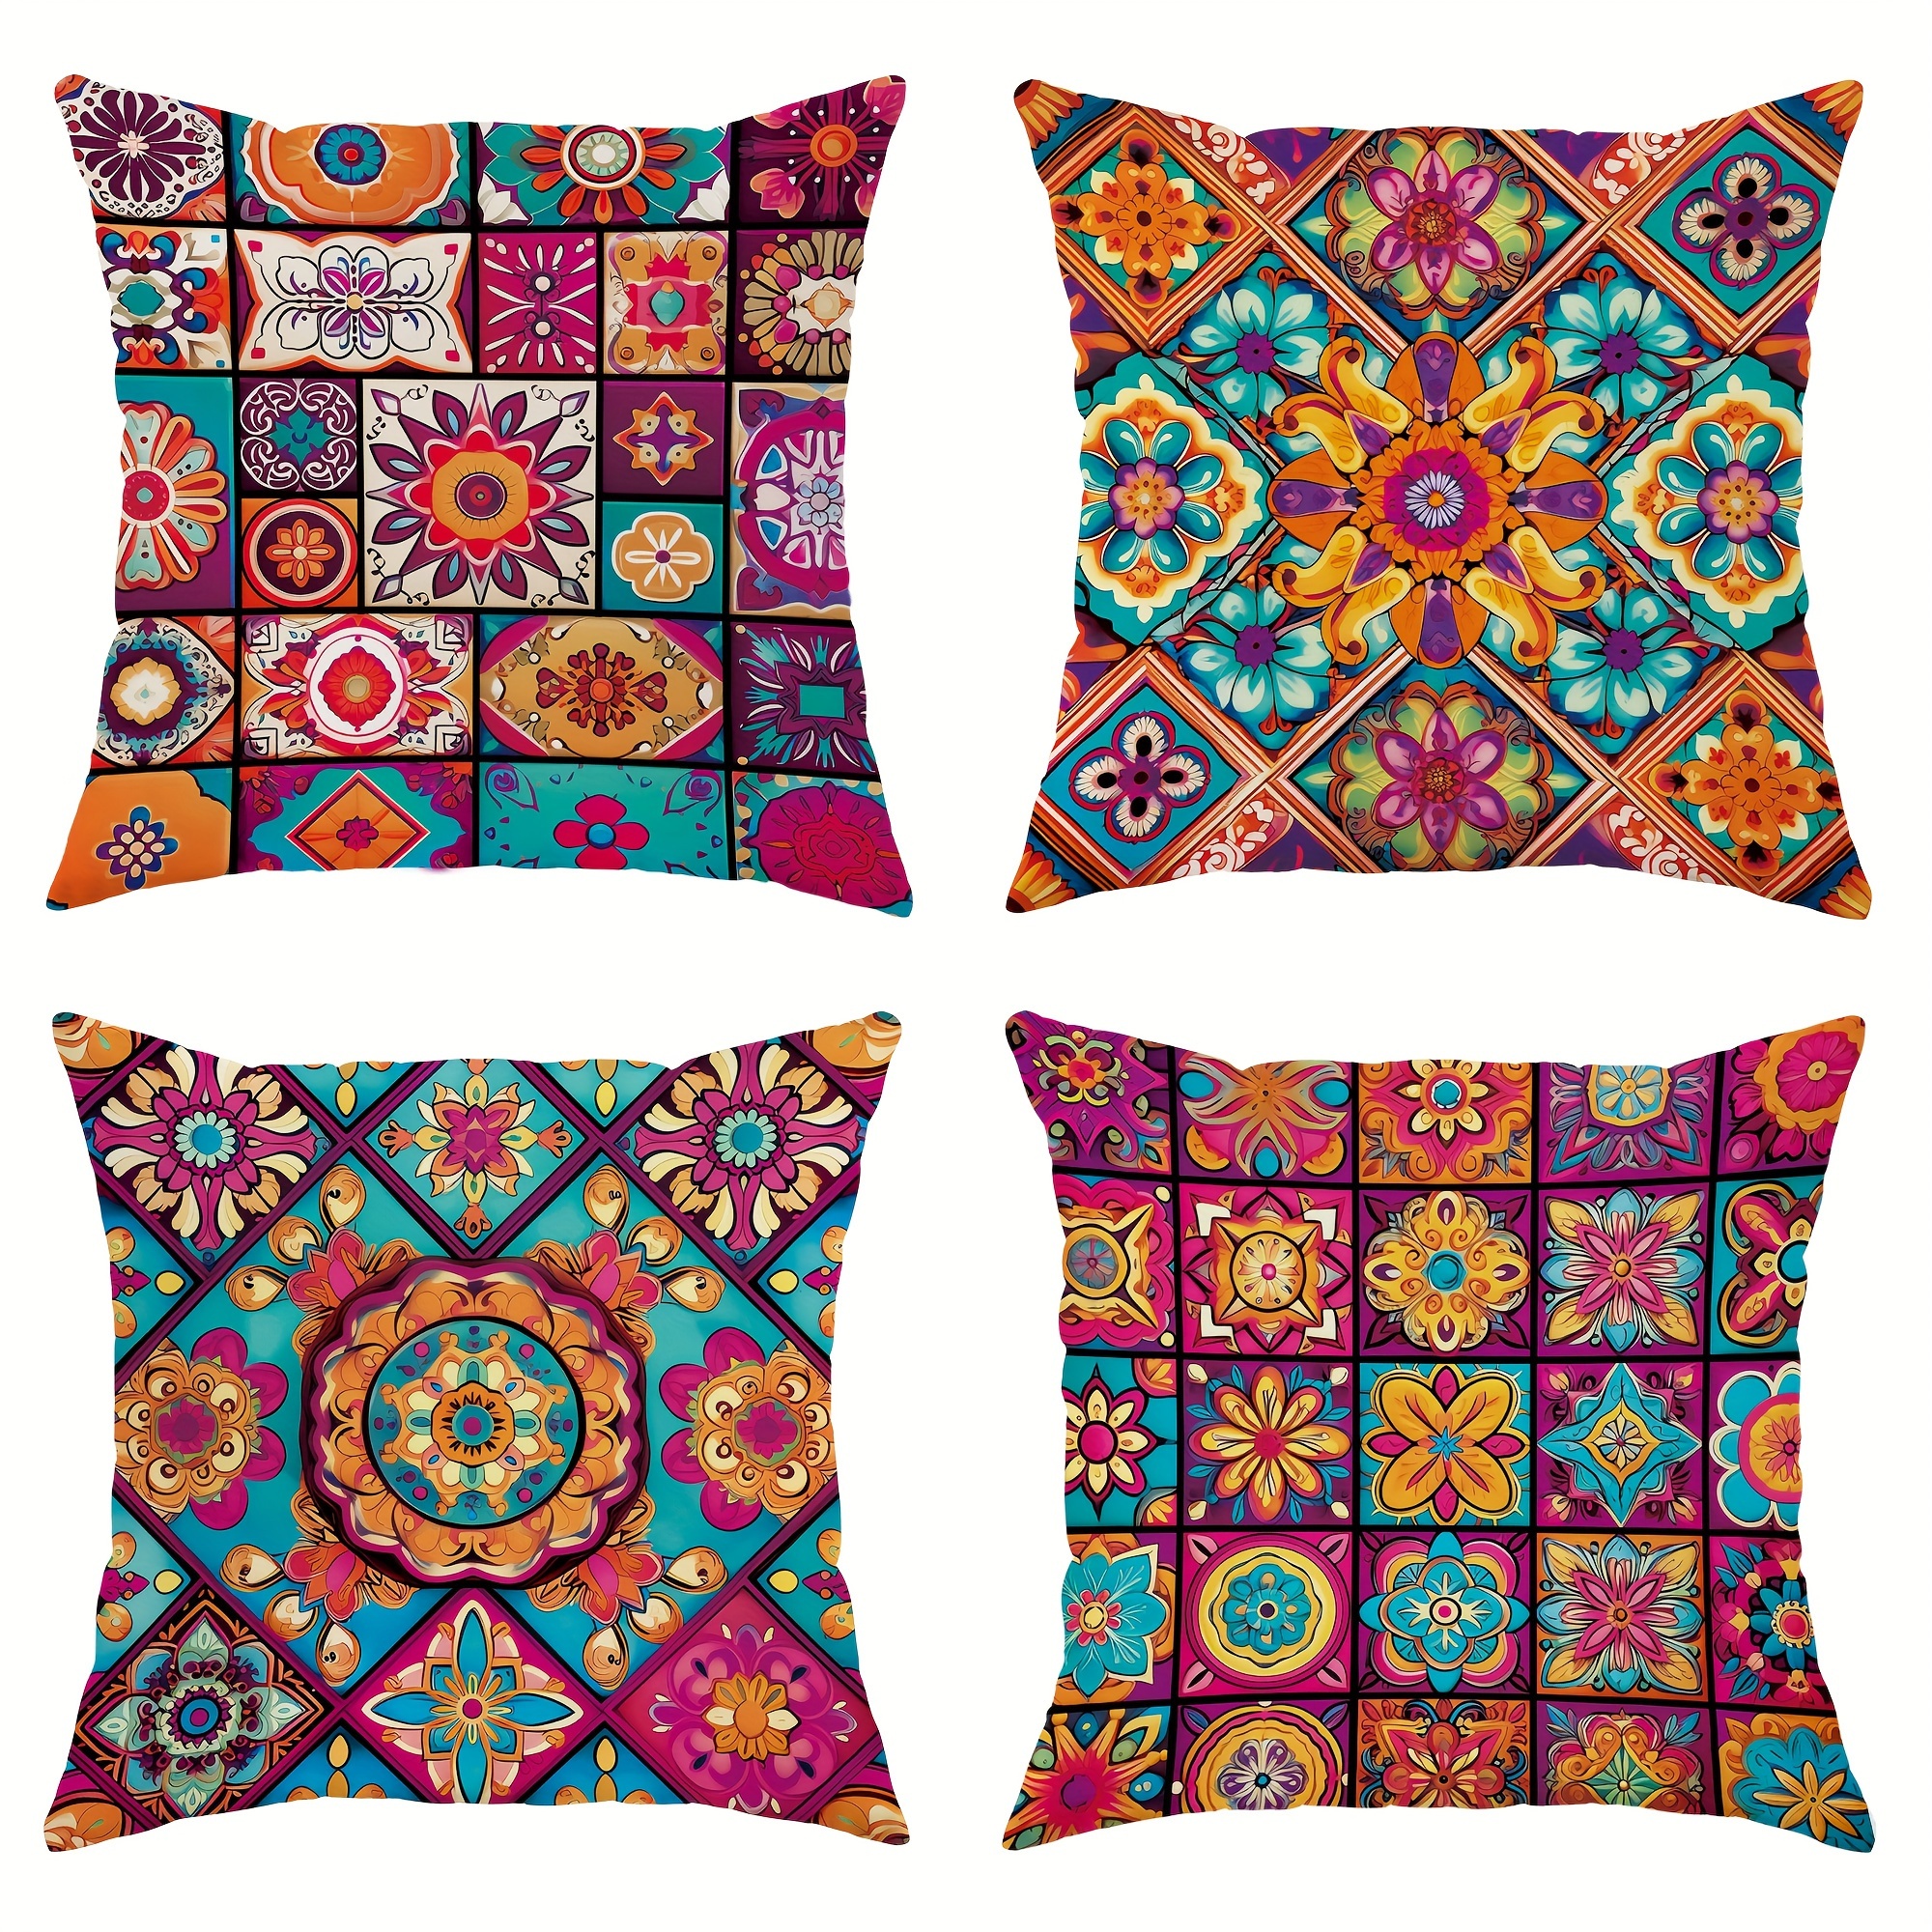 

4-piece Set Bohemian Velvet Throw Pillow Covers - Vintage Mandala & Lattice Design In Pink And Orange, Zip Closure For Living Room And Bedroom Decor